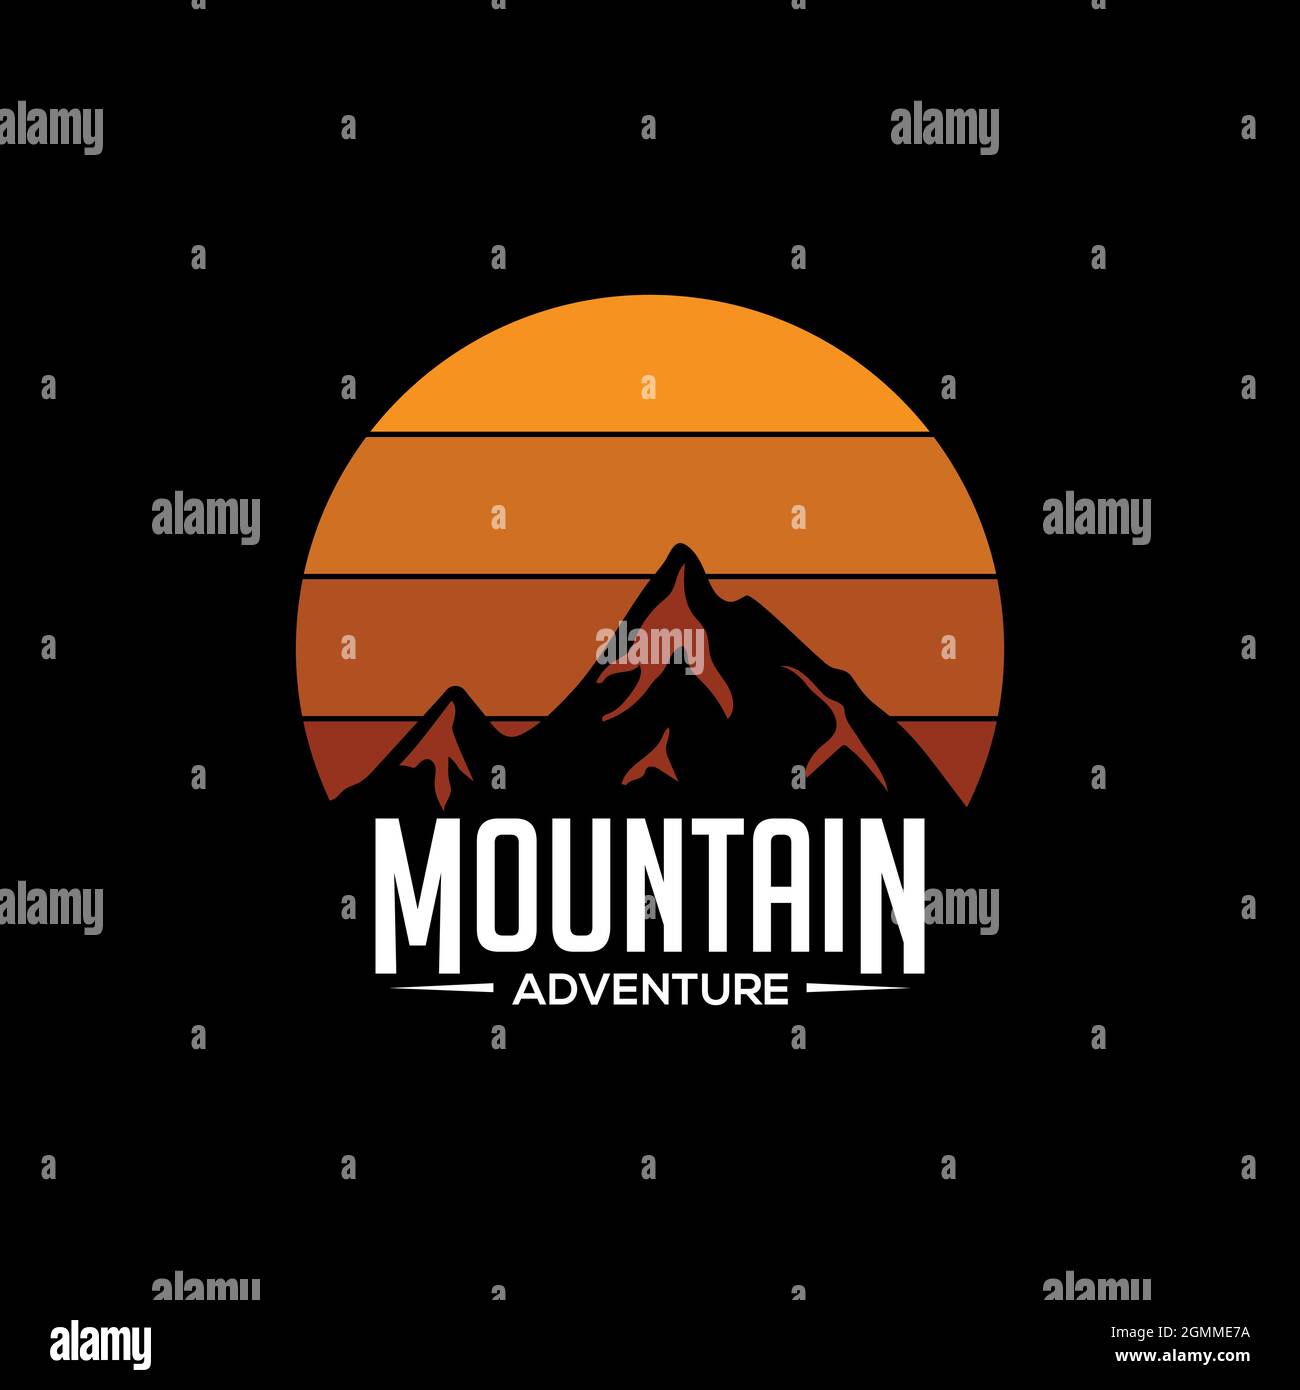 Mountain Adventure Logo Design Vektor, Sonnenuntergang Outdoor Grafik Illustration mit Spitze Silhouette Stock Vektor